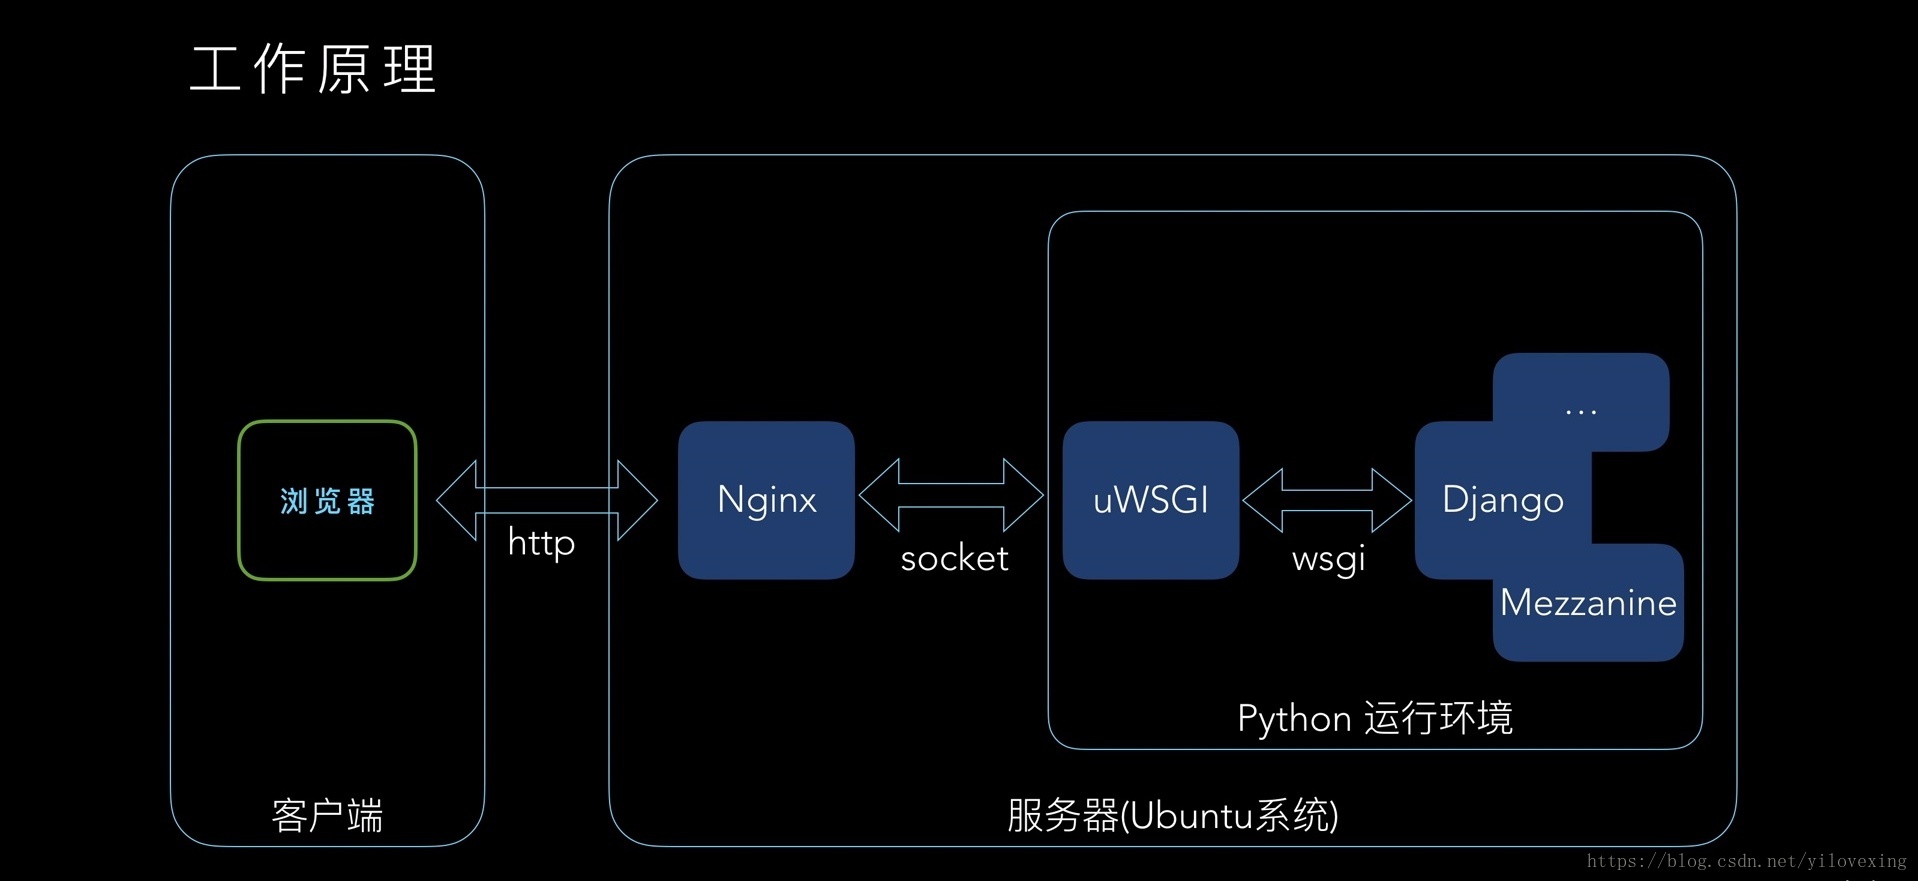 Python 生产环境架构